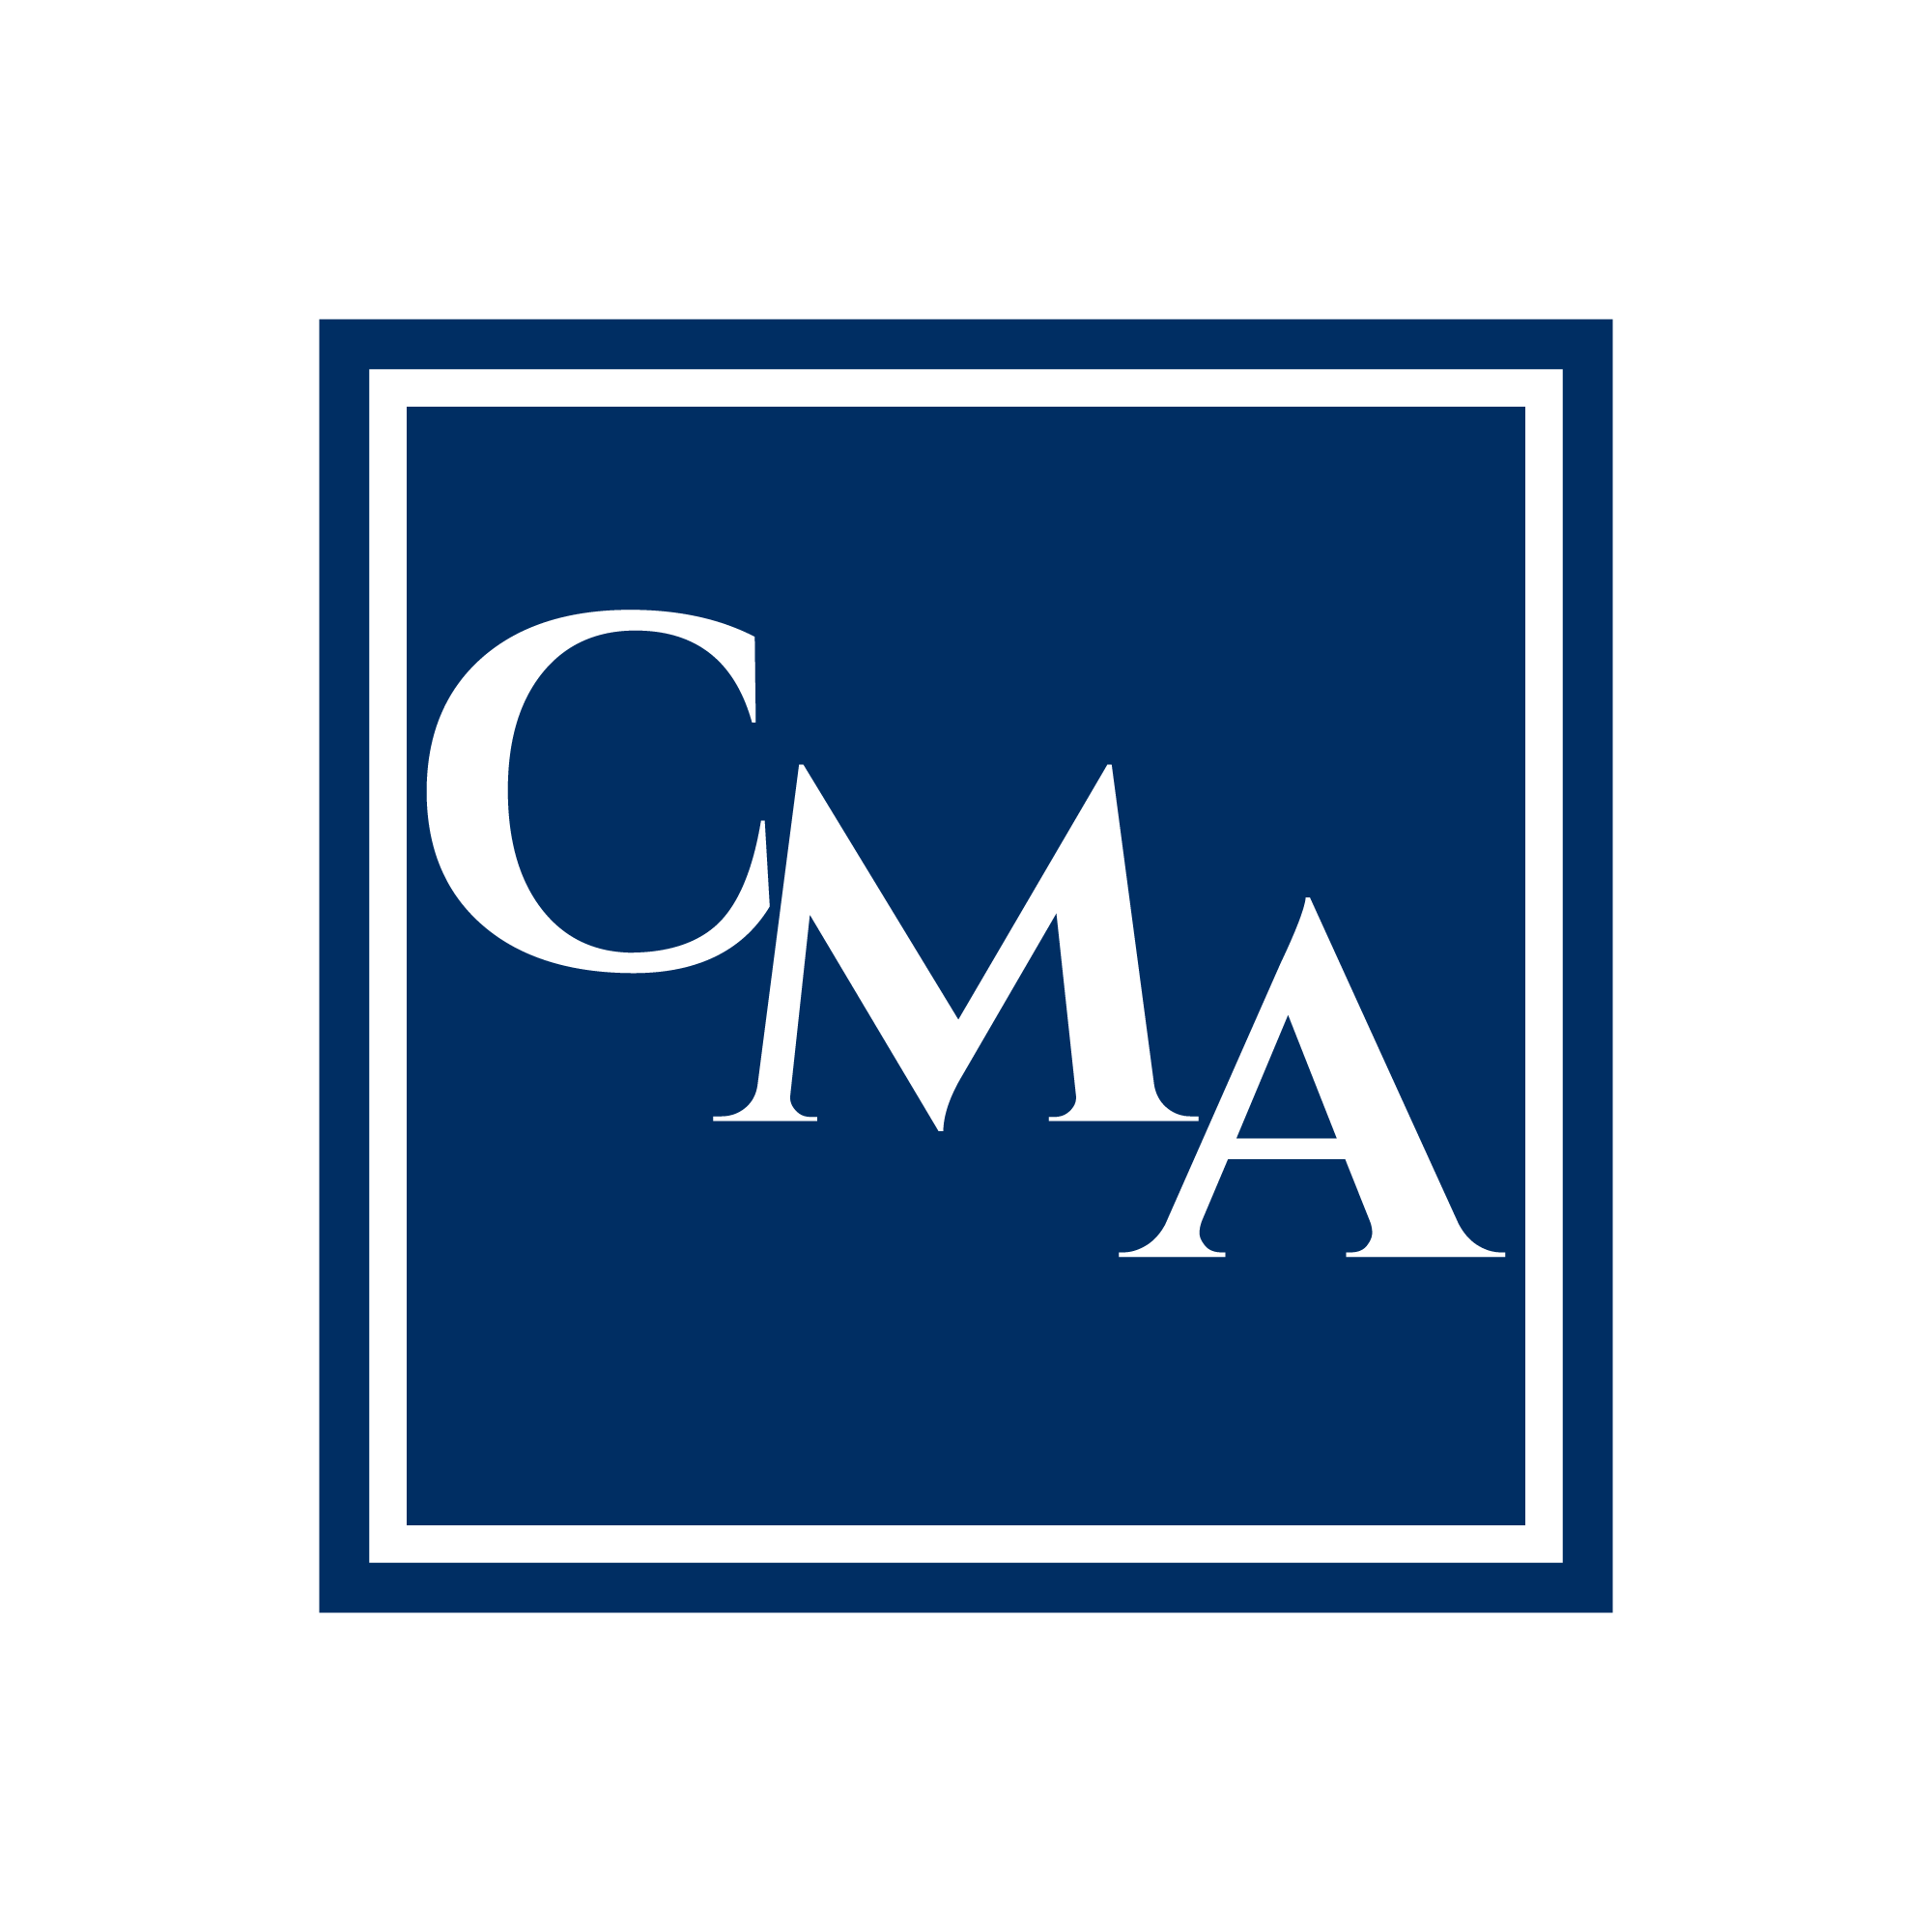 CMA Trademarks, LLC